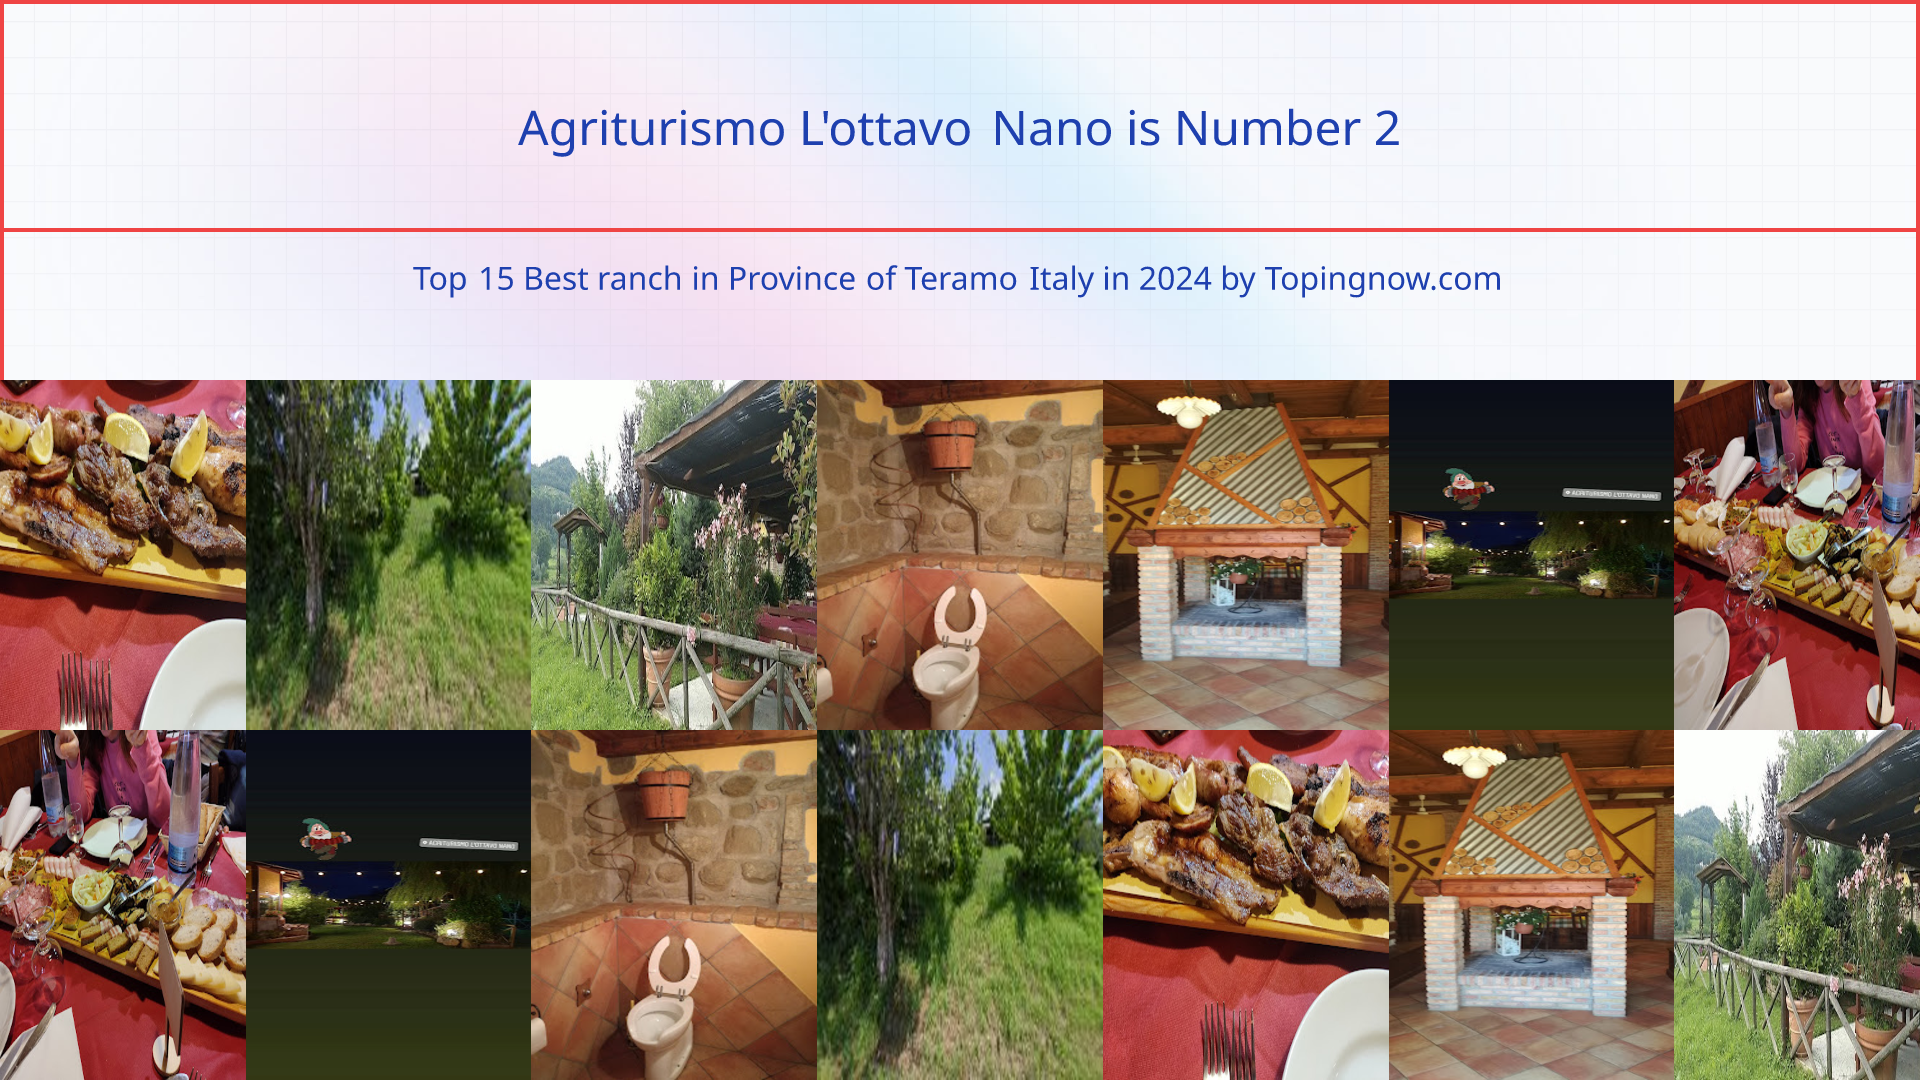 Agriturismo L'ottavo Nano: Top 15 Best ranch in Province of Teramo Italy in 2024